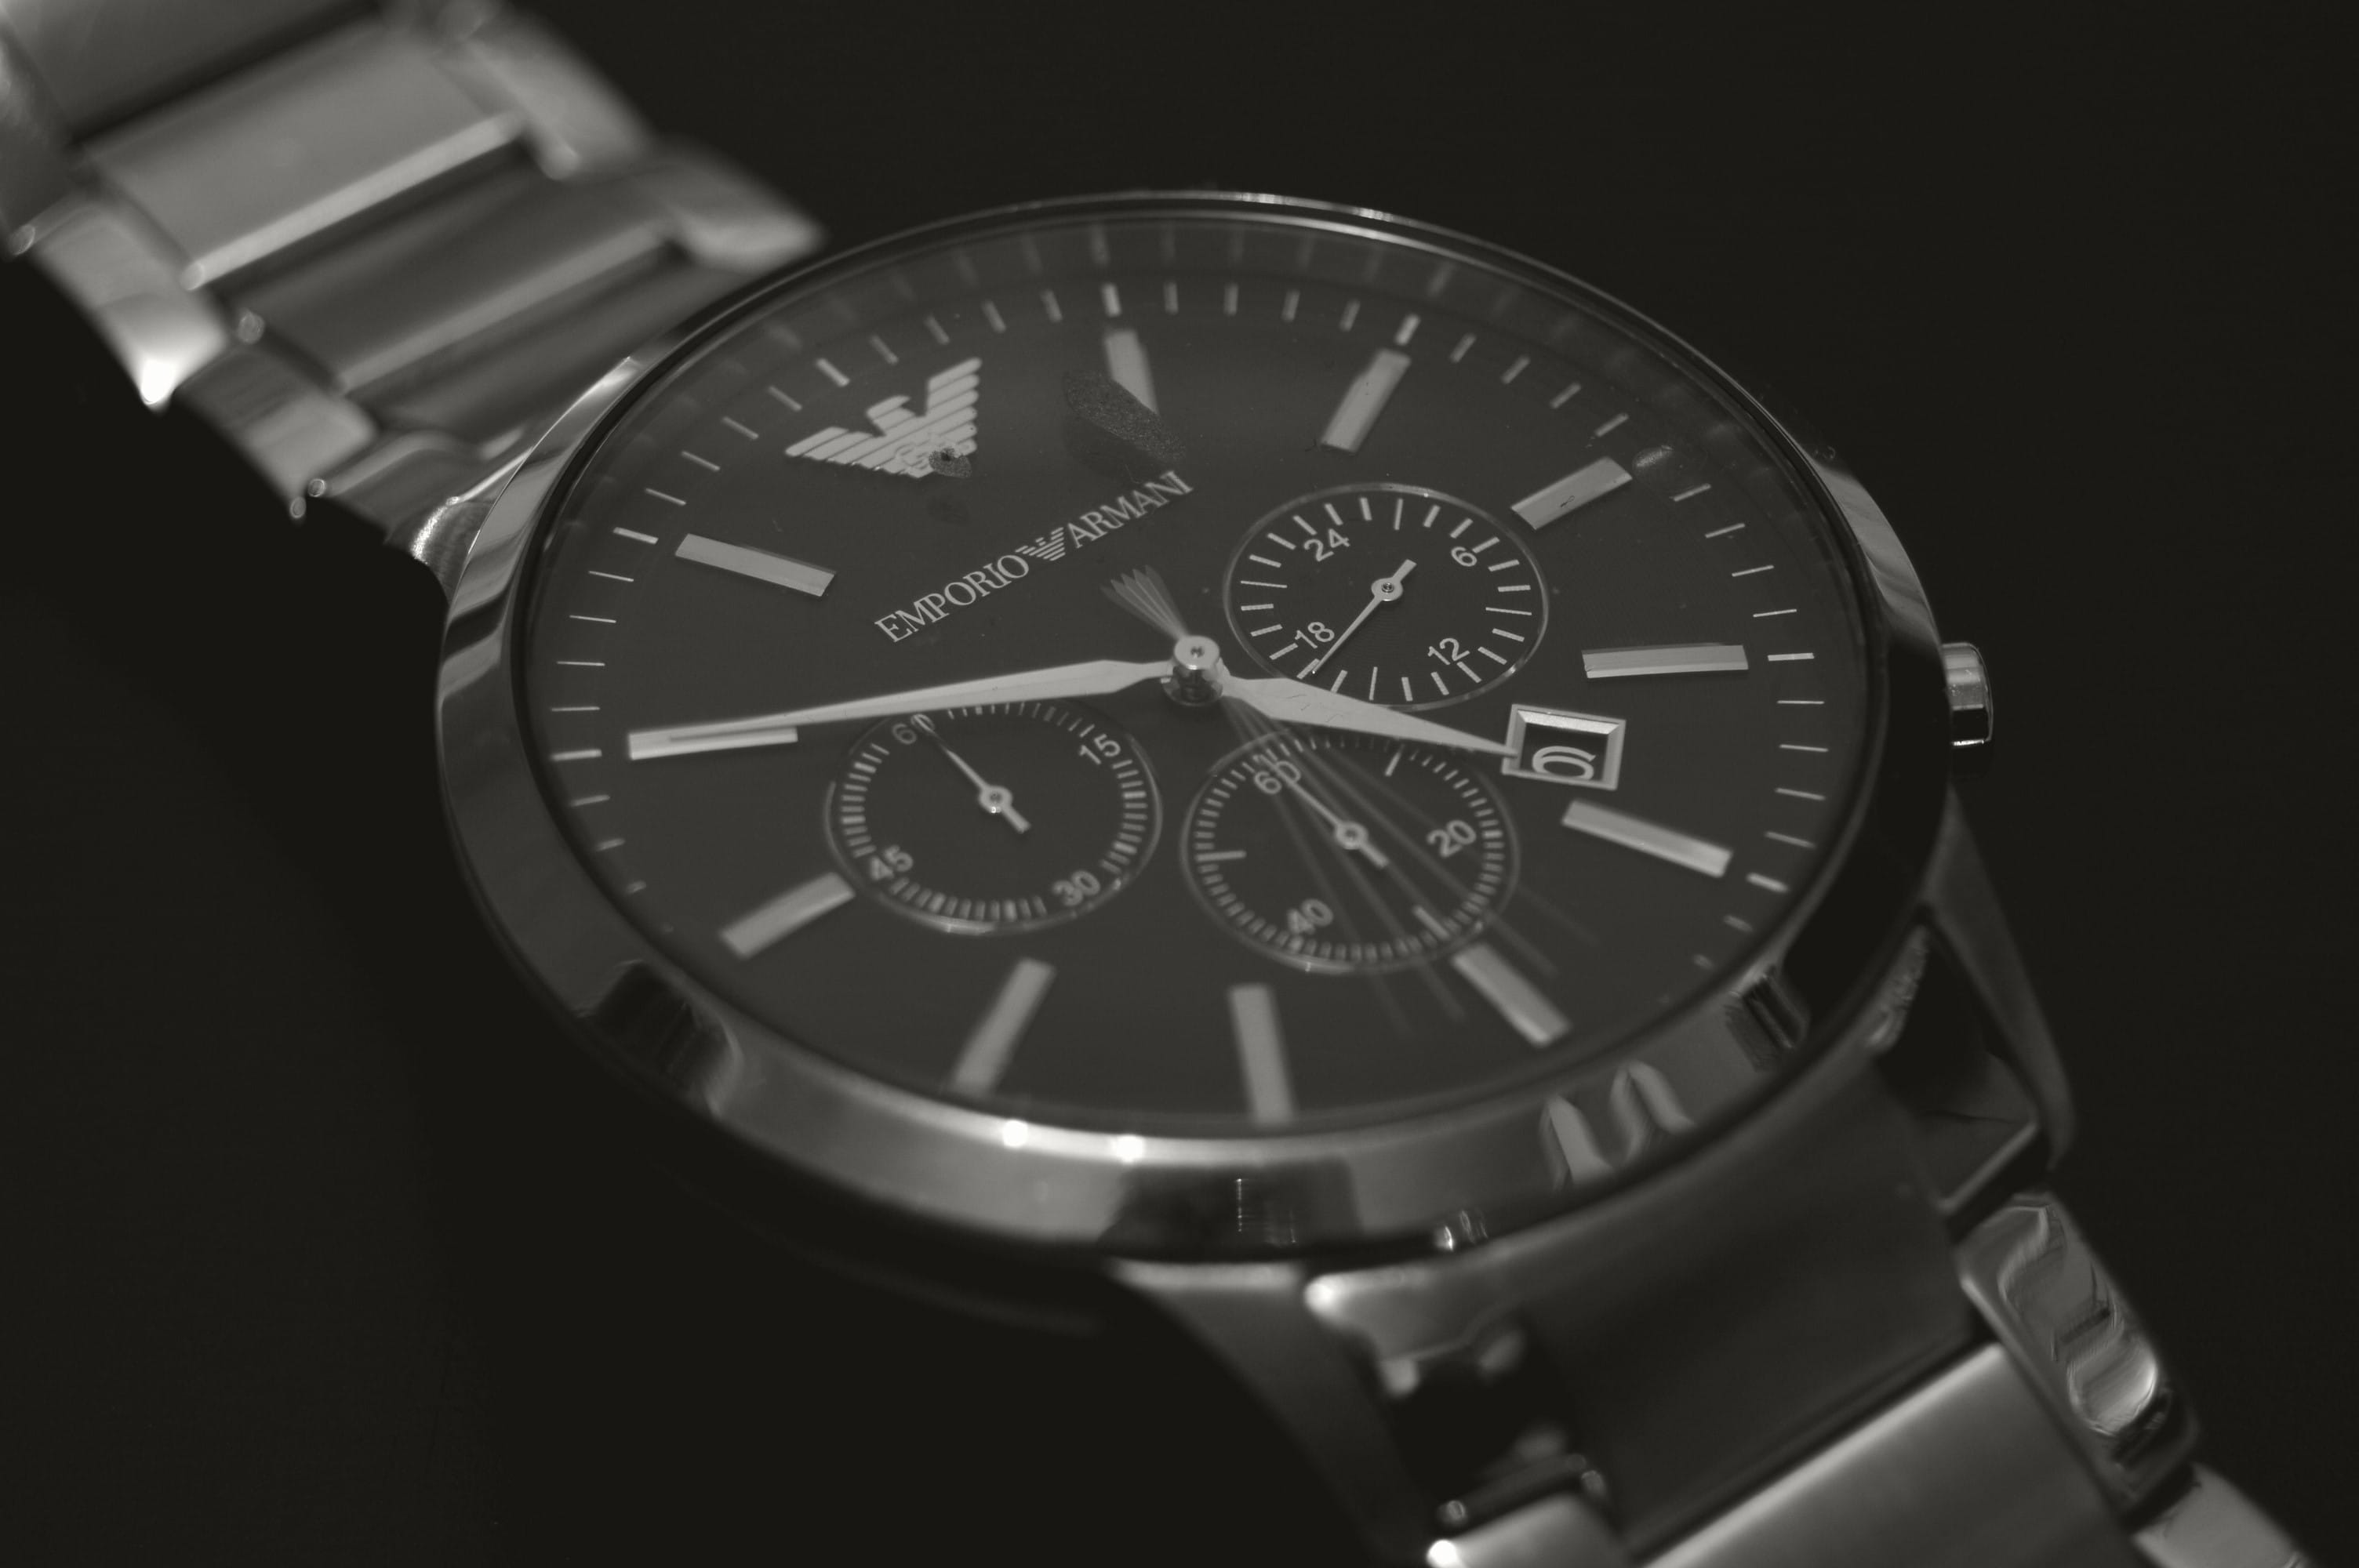 Round Silver-colored Emporio Armani Chronograph Watch, Analogue